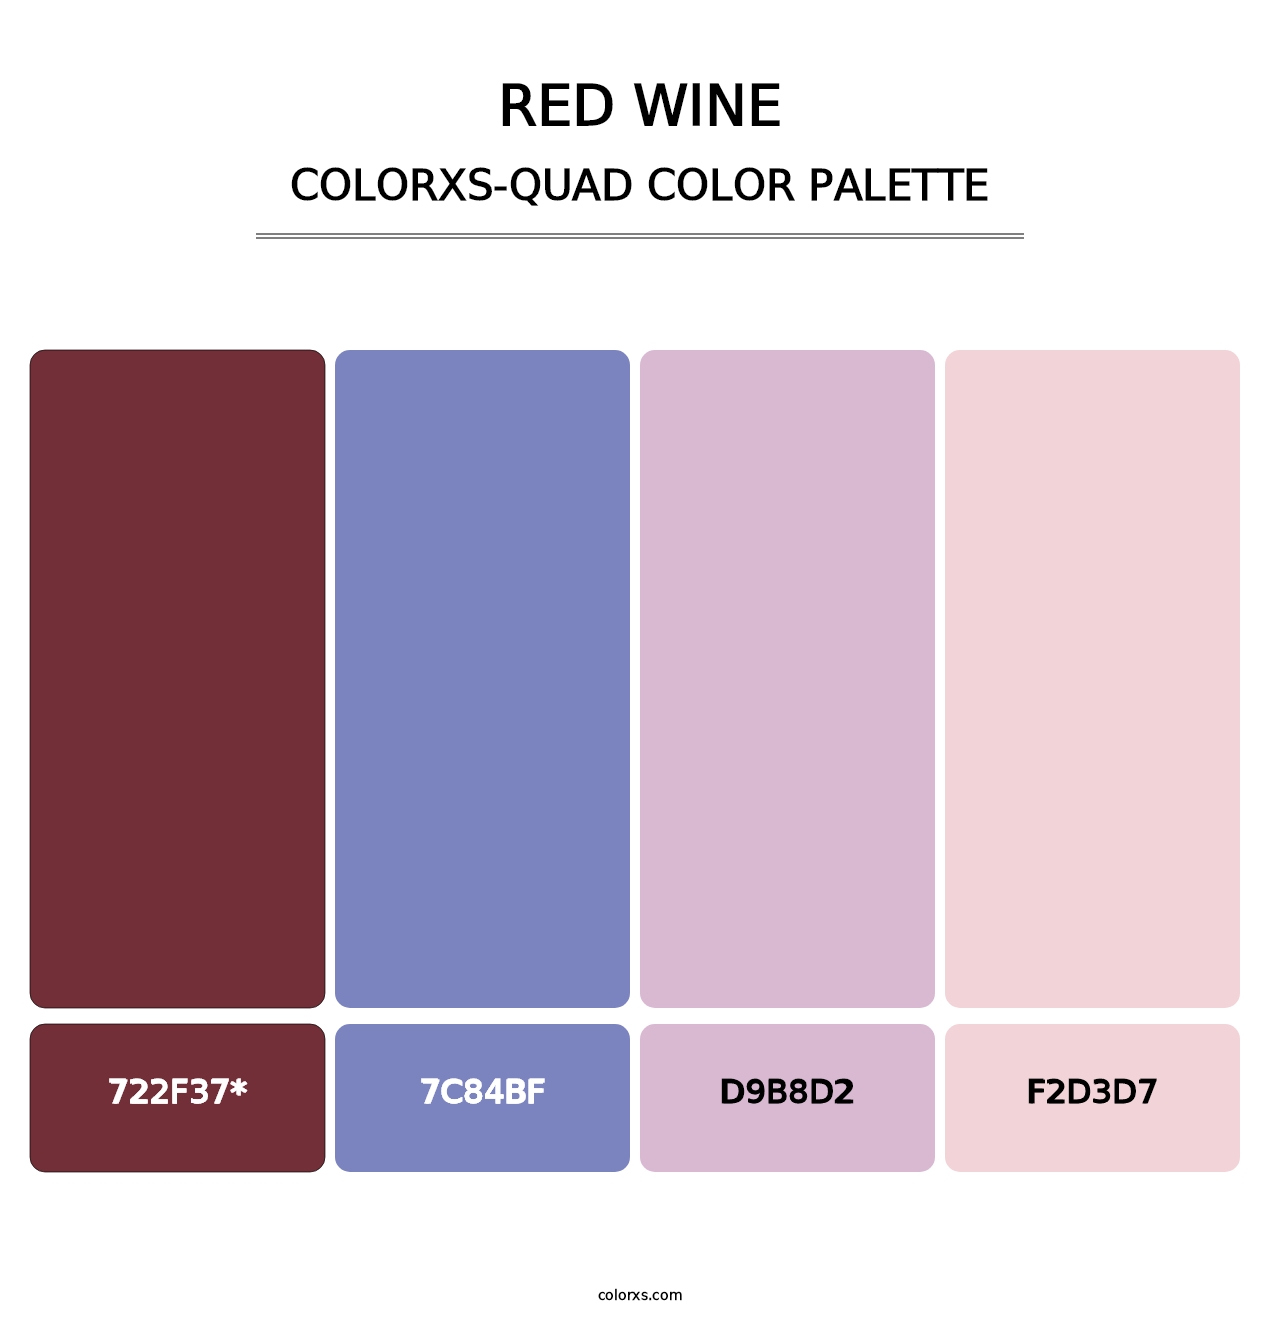 Red Wine - Colorxs Quad Palette